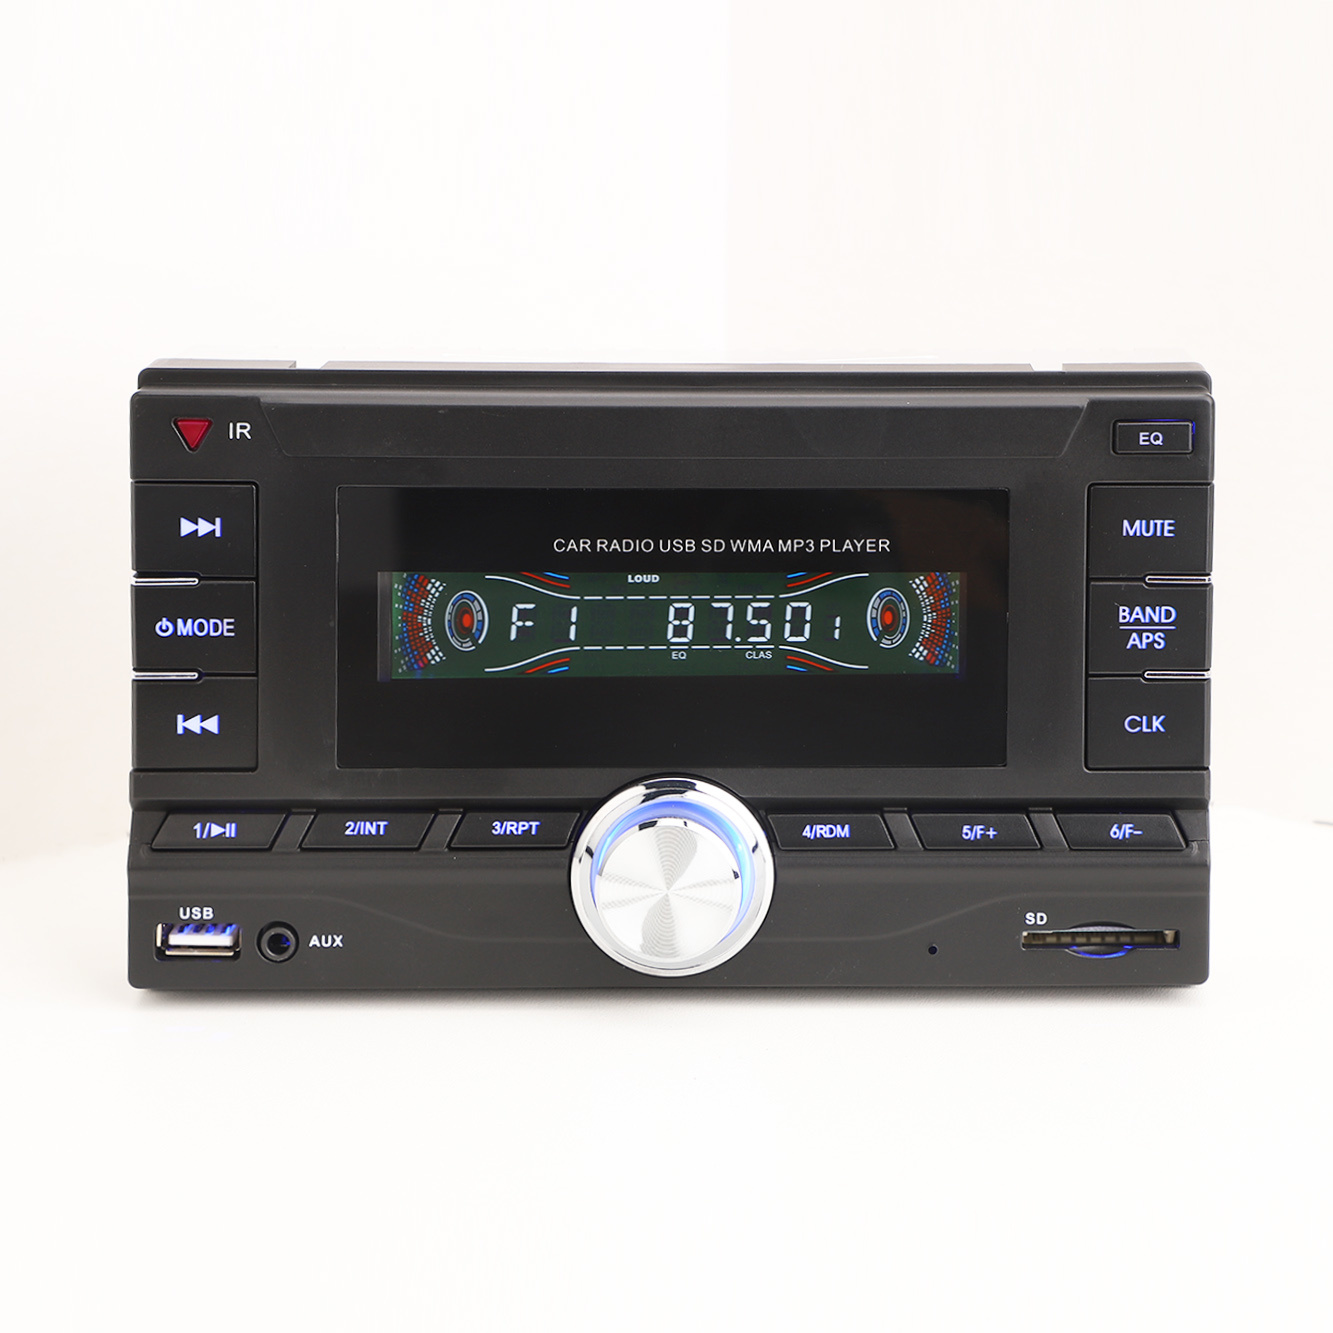 MP3-Player für Autoradio, MP3 im Auto, Autoradio, Autoelektronik, Auto-Audio, Auto-LCD-Player, Auto-MP3-Player, Doppel-DIN, Auto-MP3-Radio